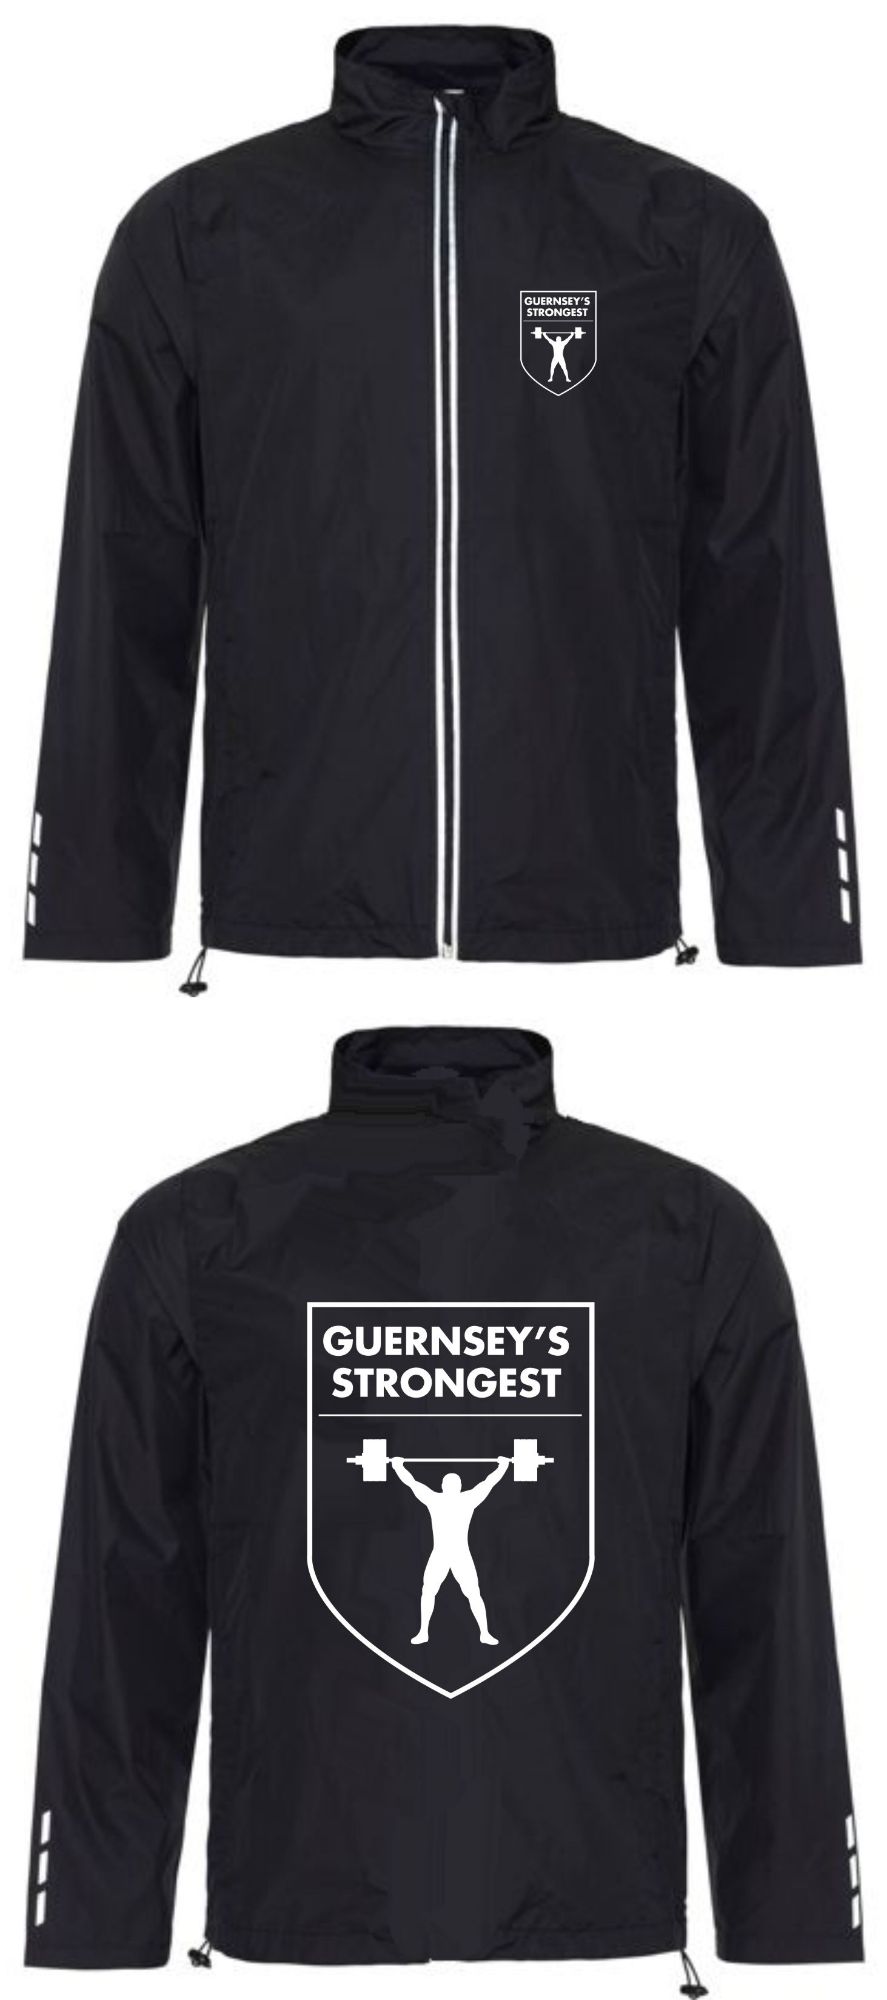 Guernsey's Strongest Windproof Lightweight Shower Resistance Running Jacket